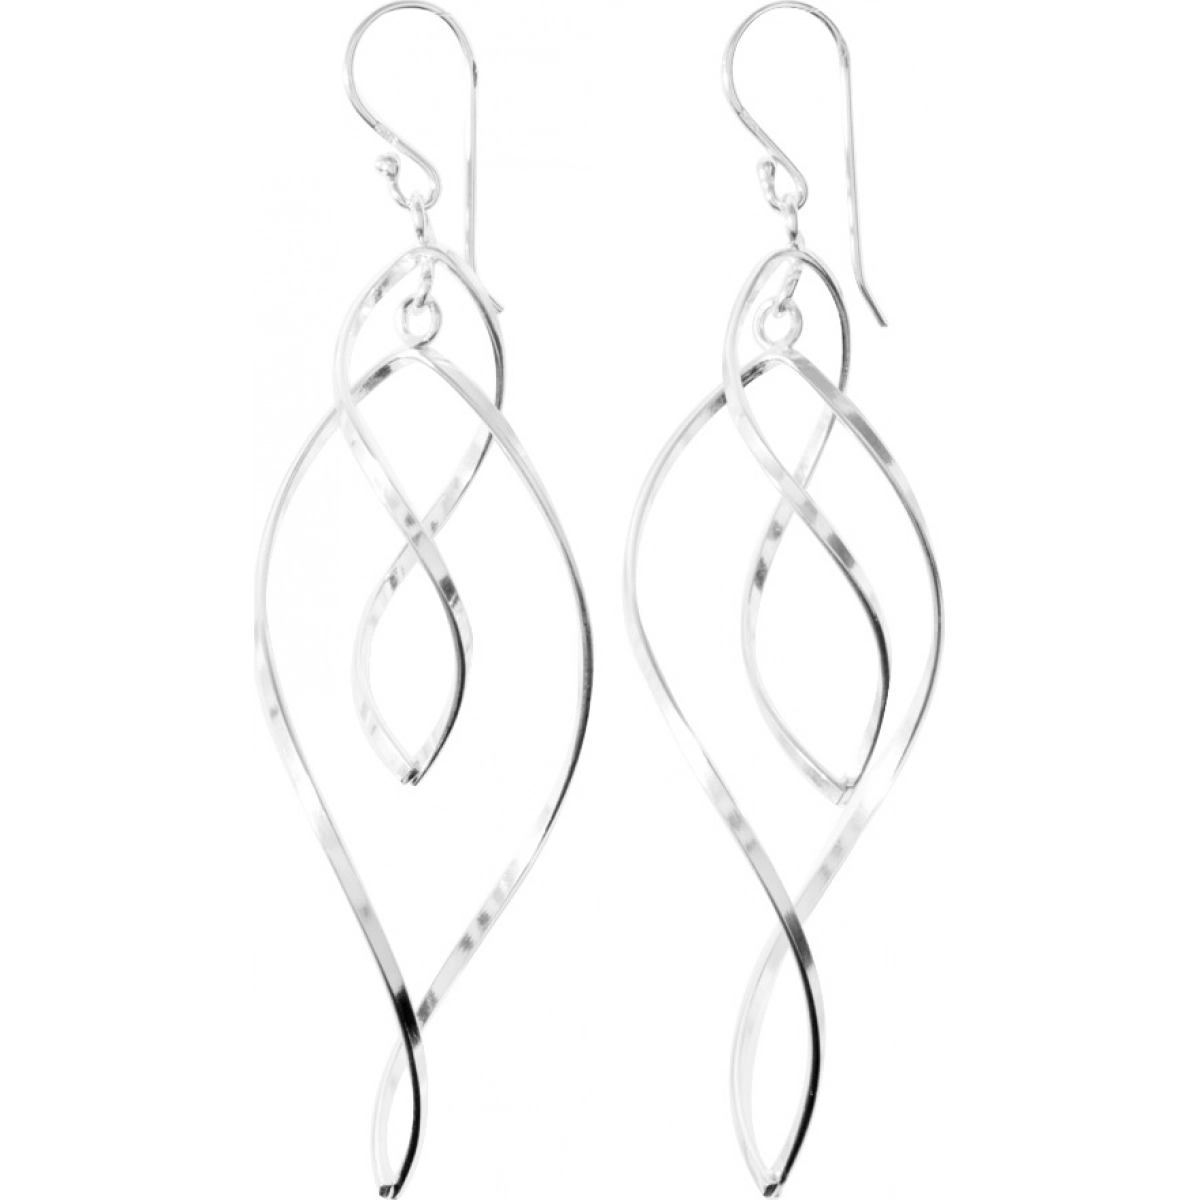 Earrings pair rh925 Silver  Lua Blanca  335075.0